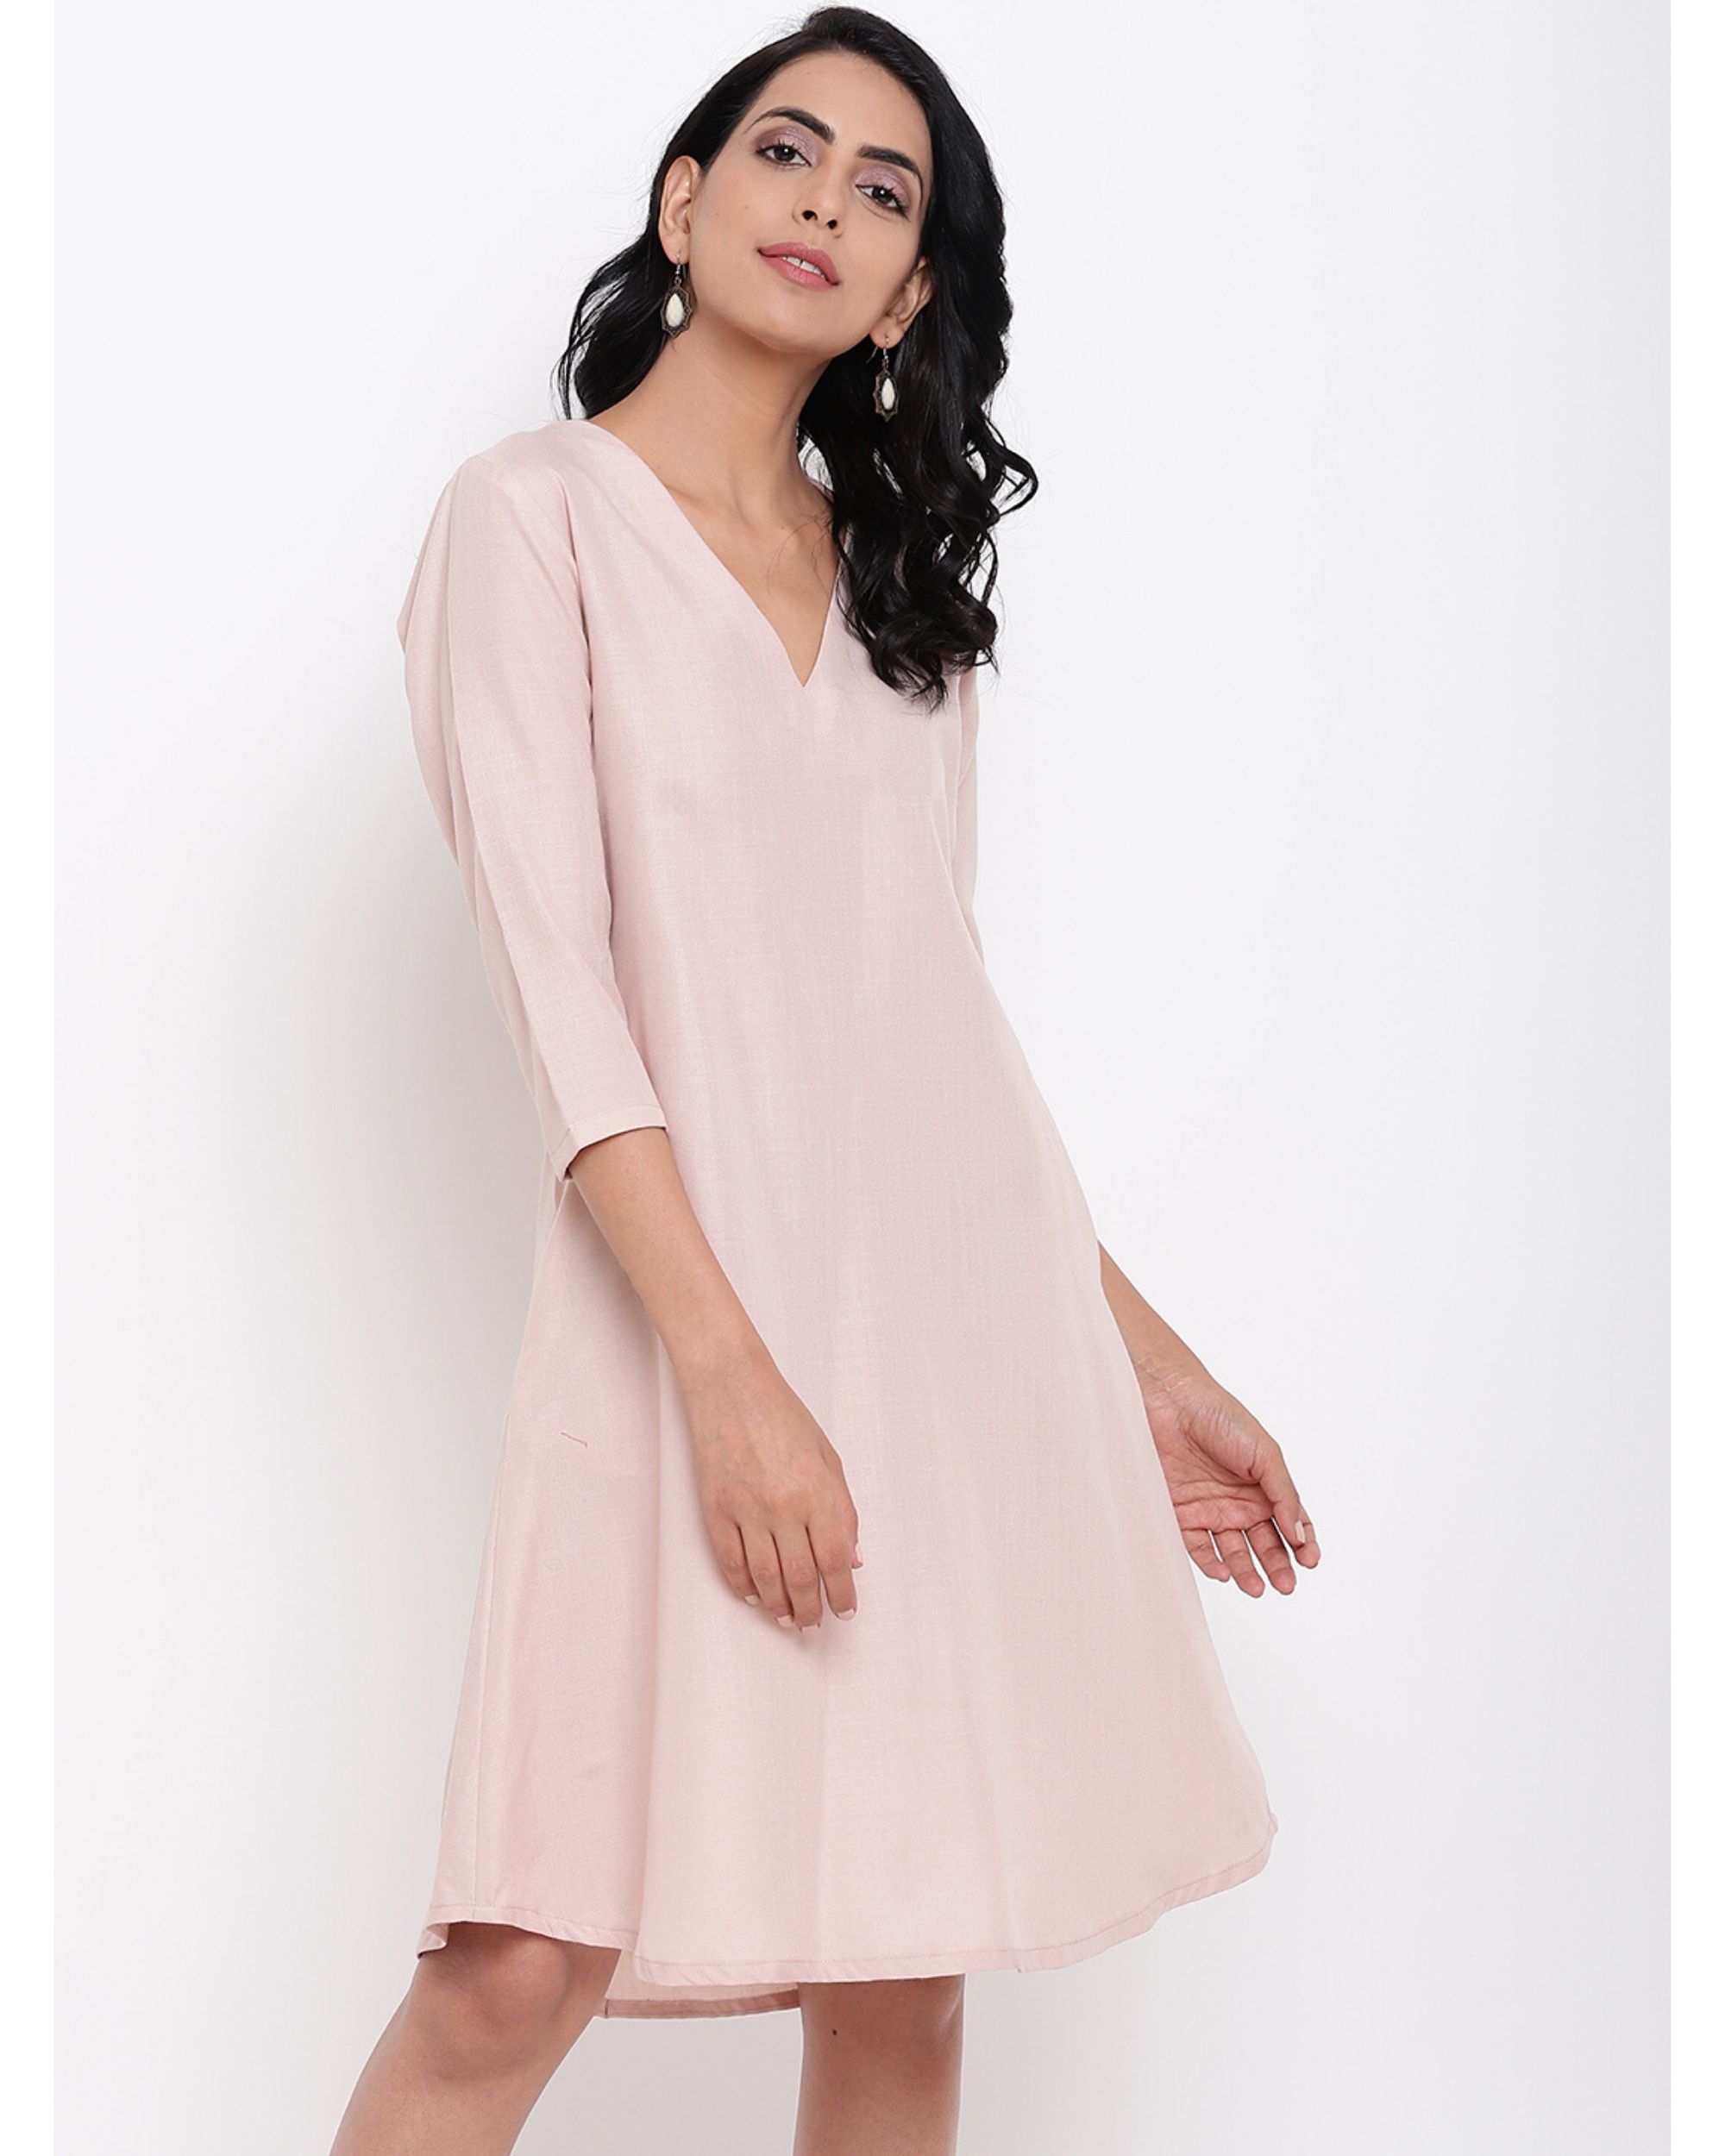 Blush pink cotton linen dress by trueBrowns | The Secret Label